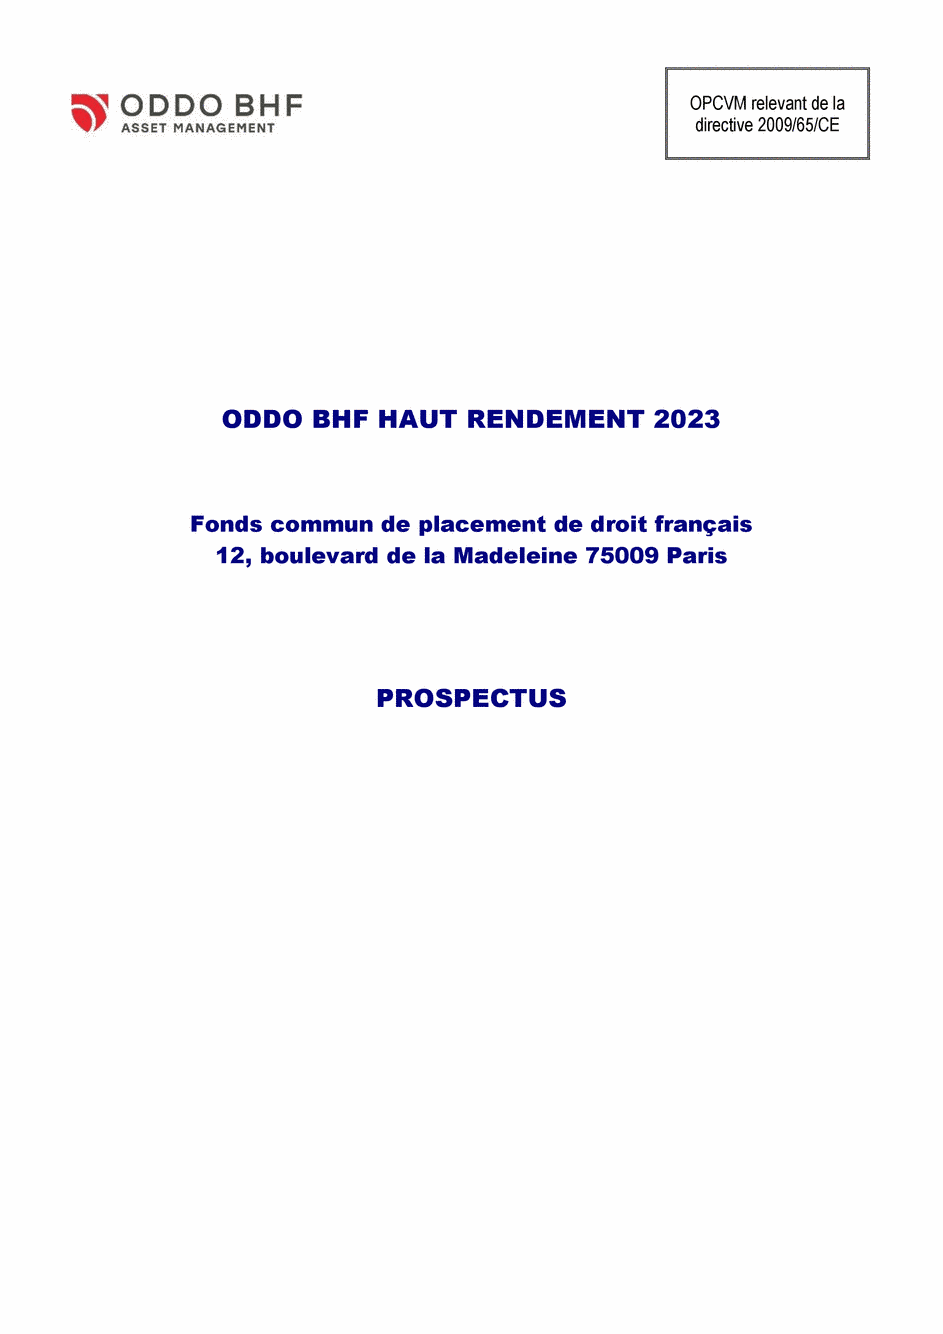 Prospectus ODDO BHF HAUT RENDEMENT 2023 GC-EUR - 25/09/2020 - Français